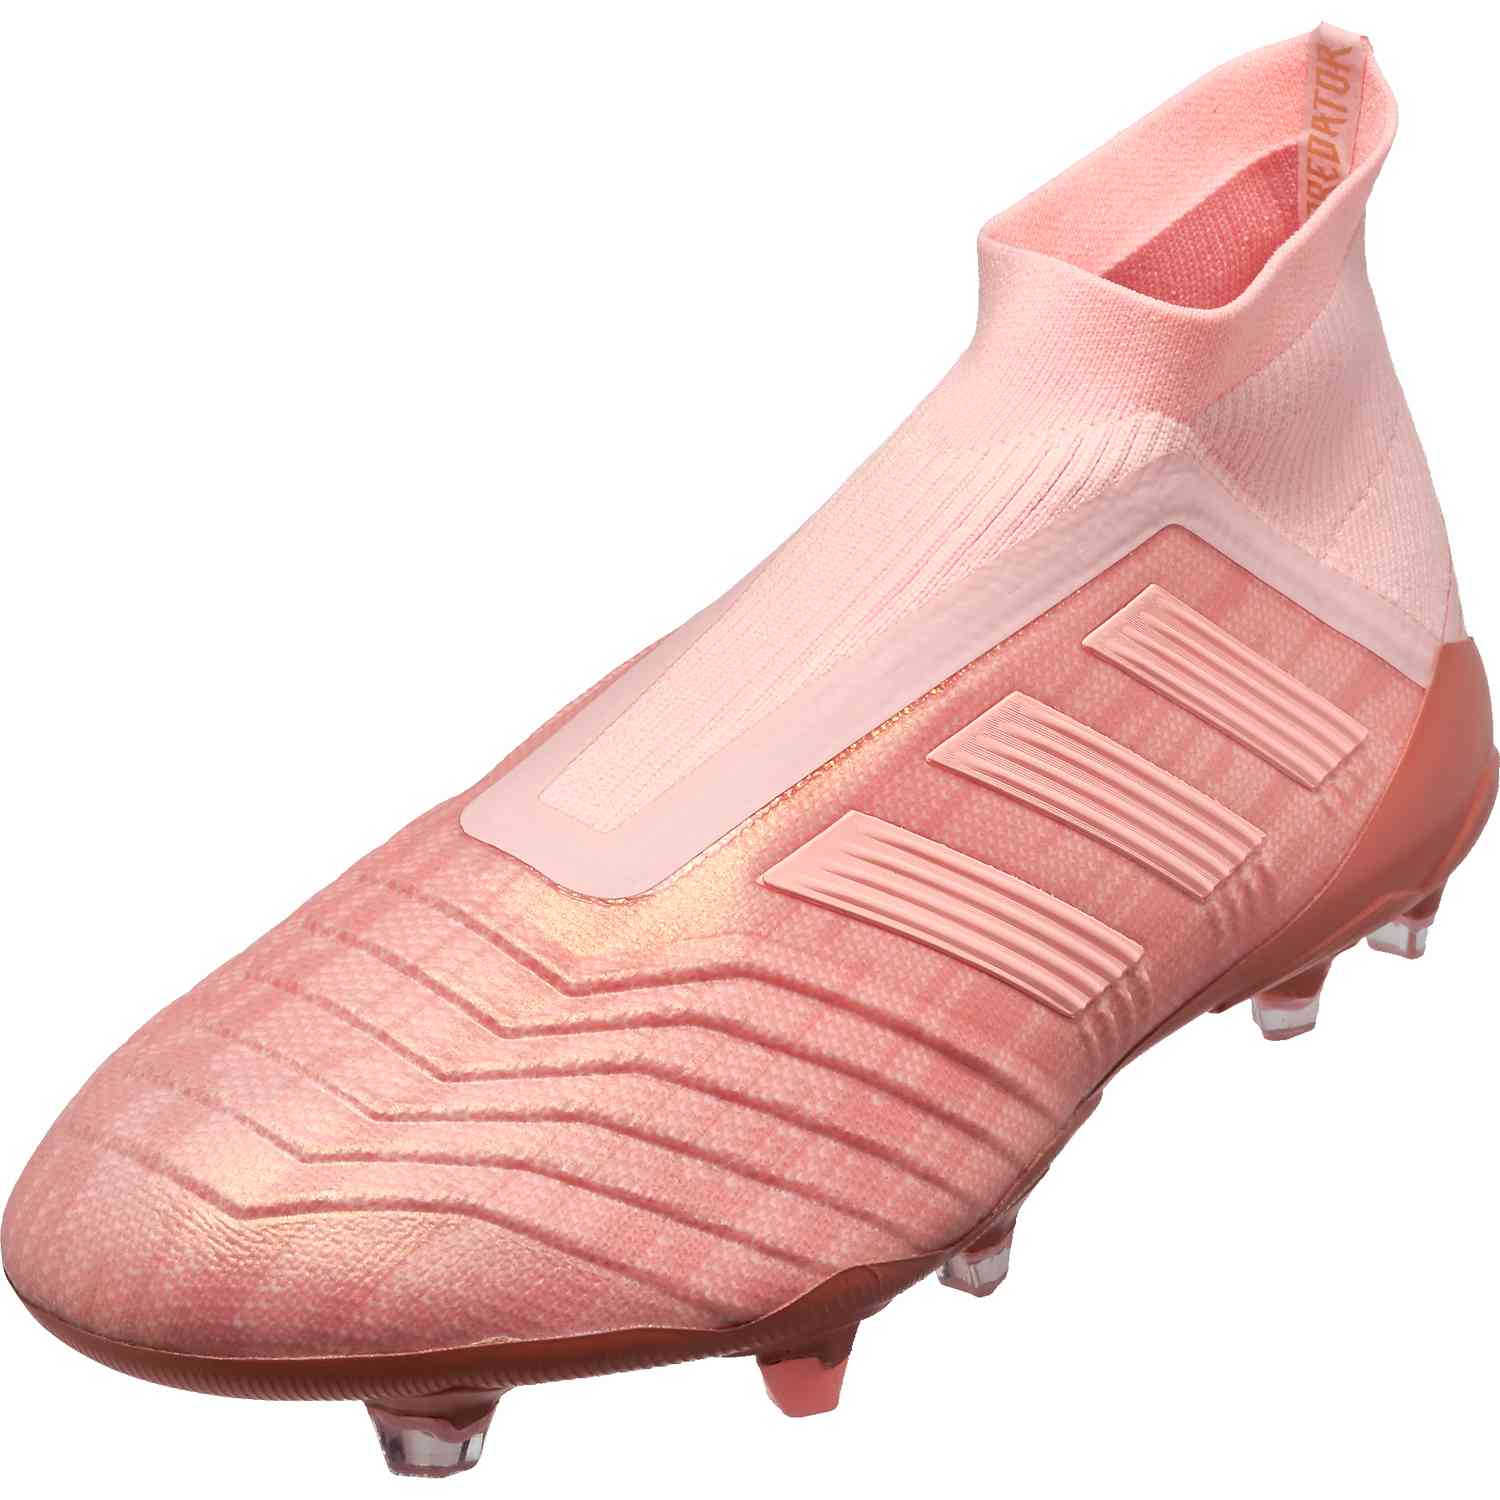 adidas predator cleats pink